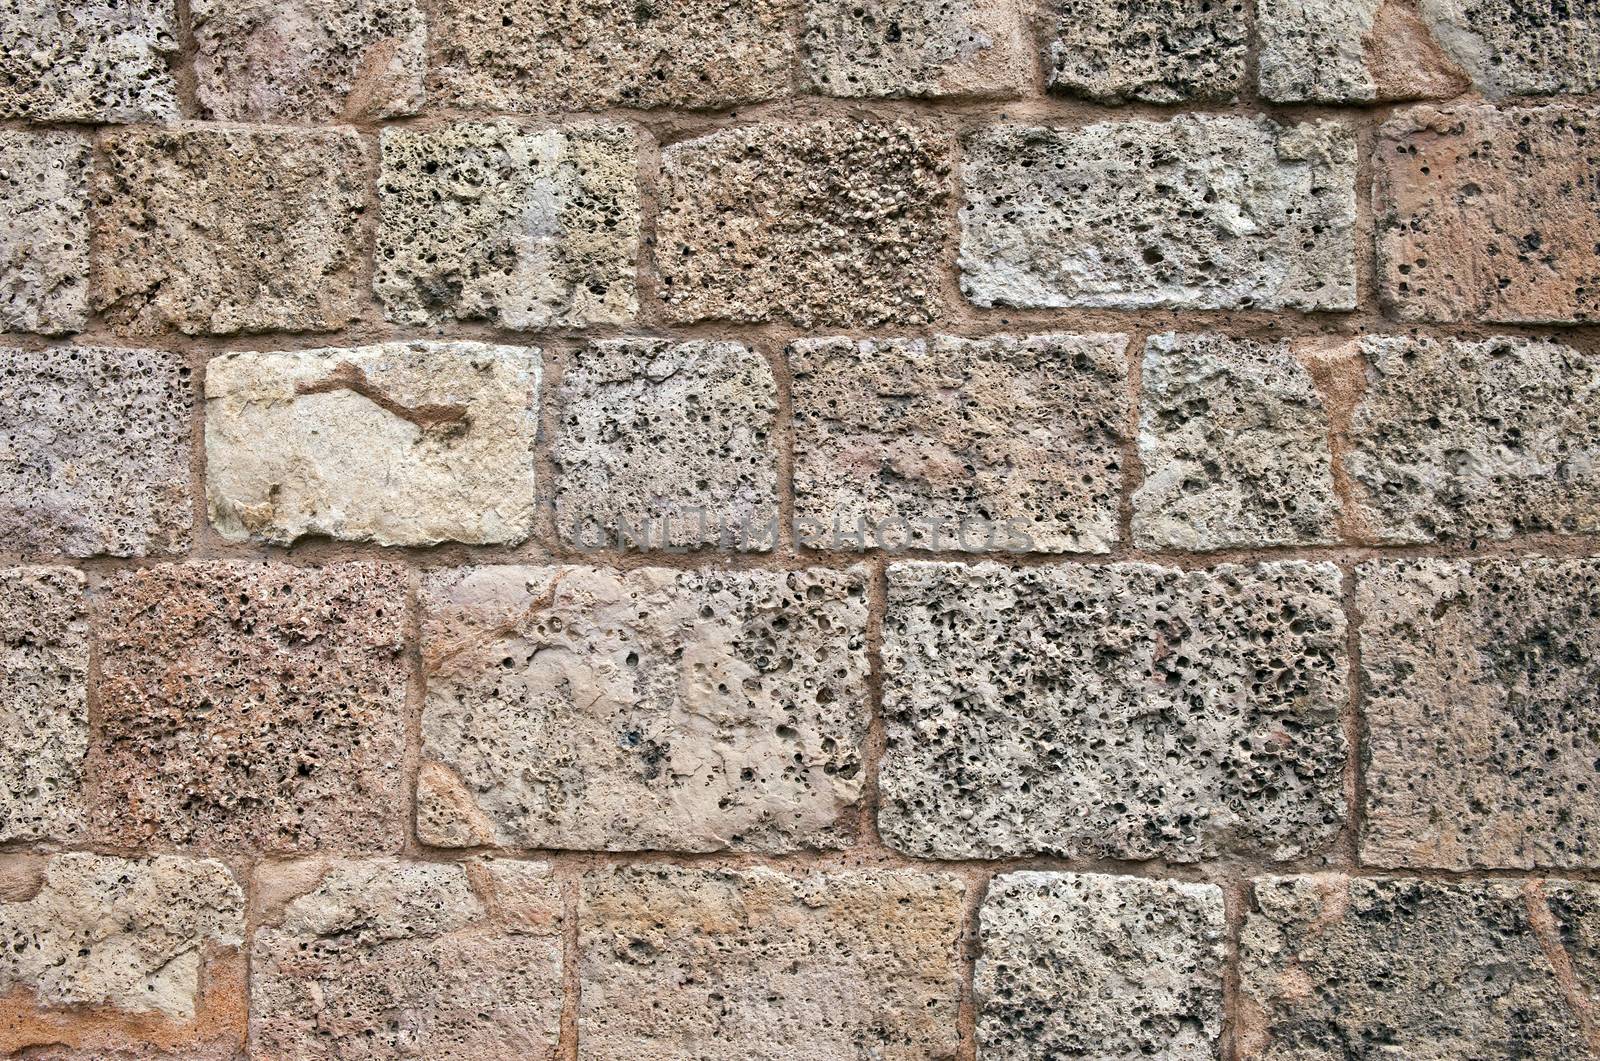 An old Brick Wall Texture.